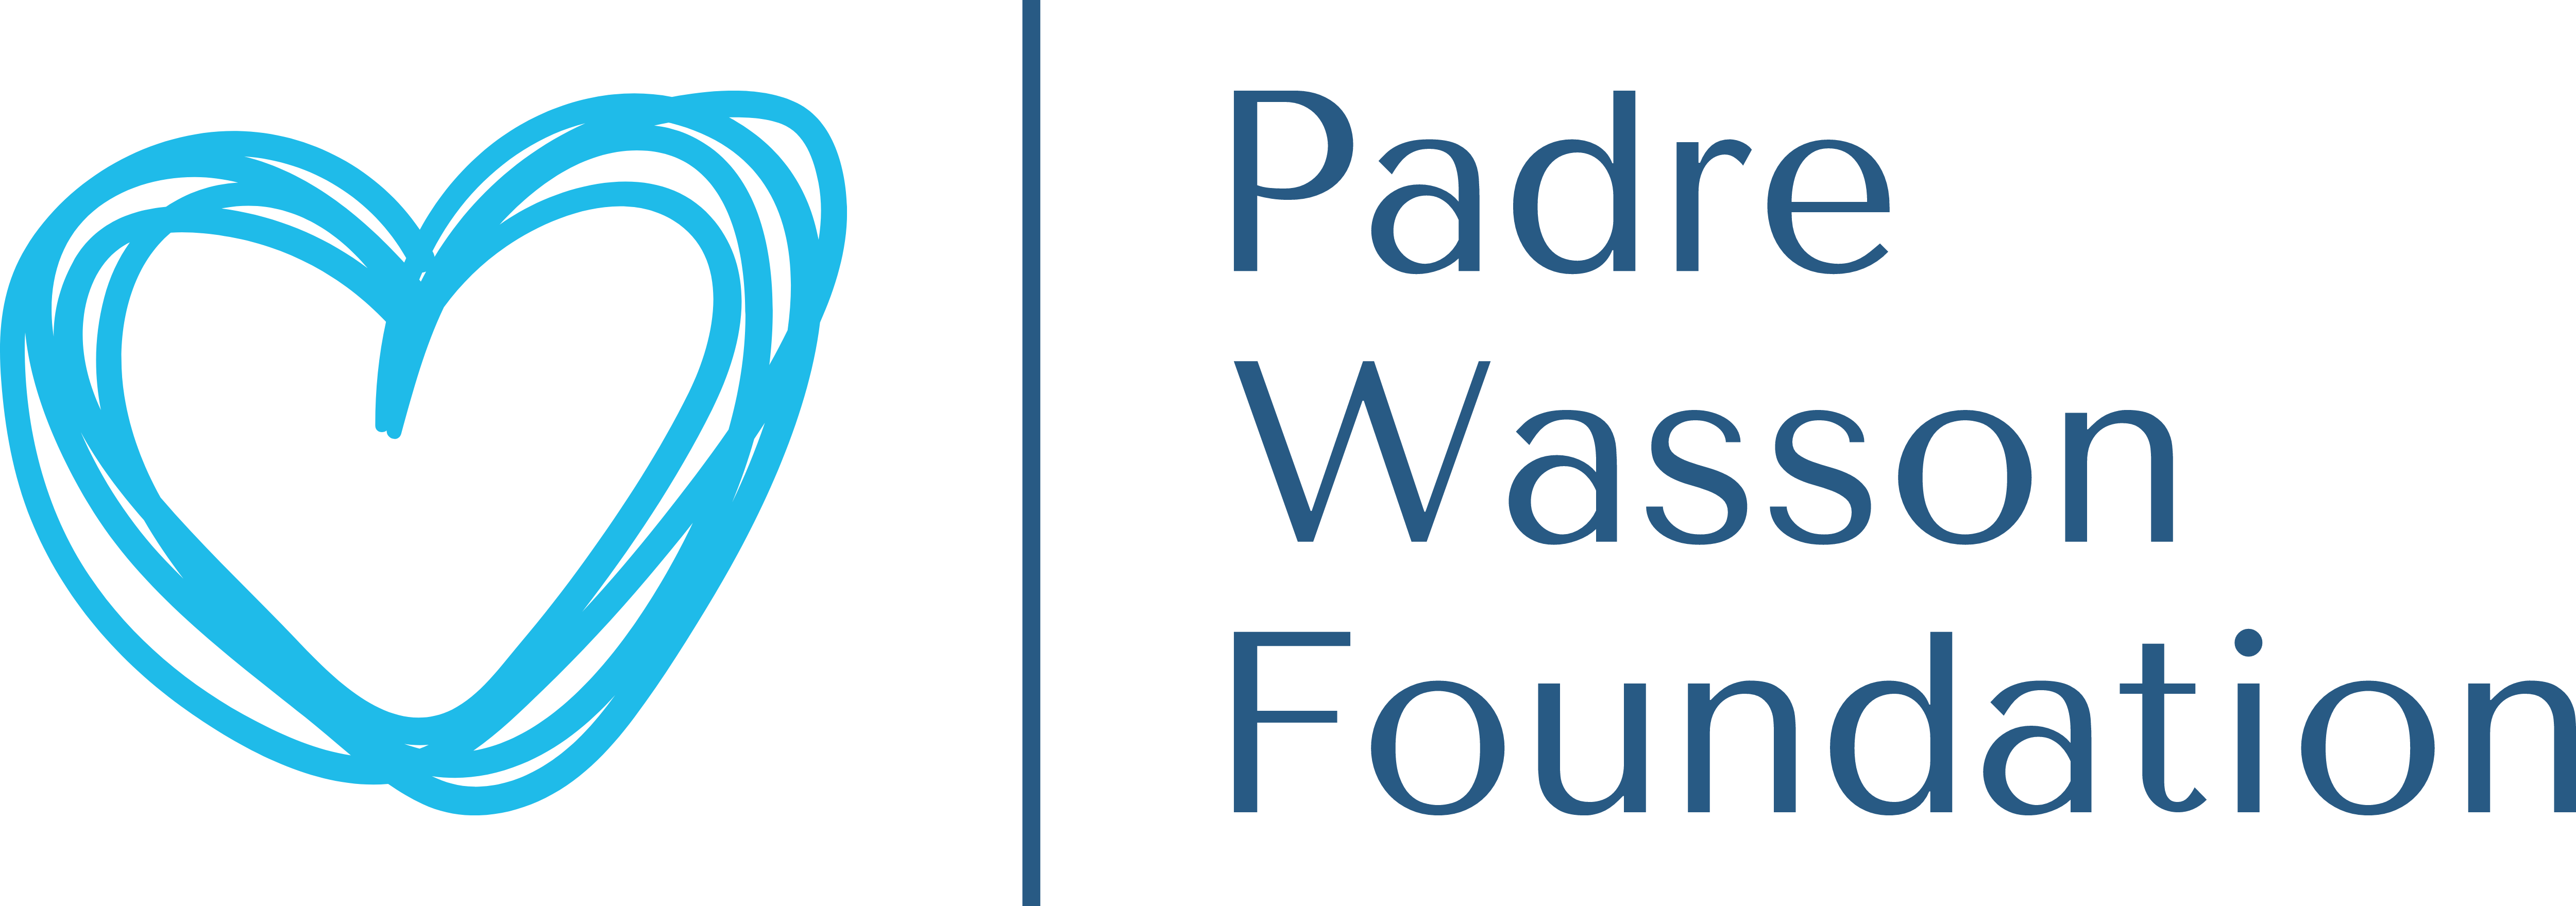 Padre Wasson Foundation